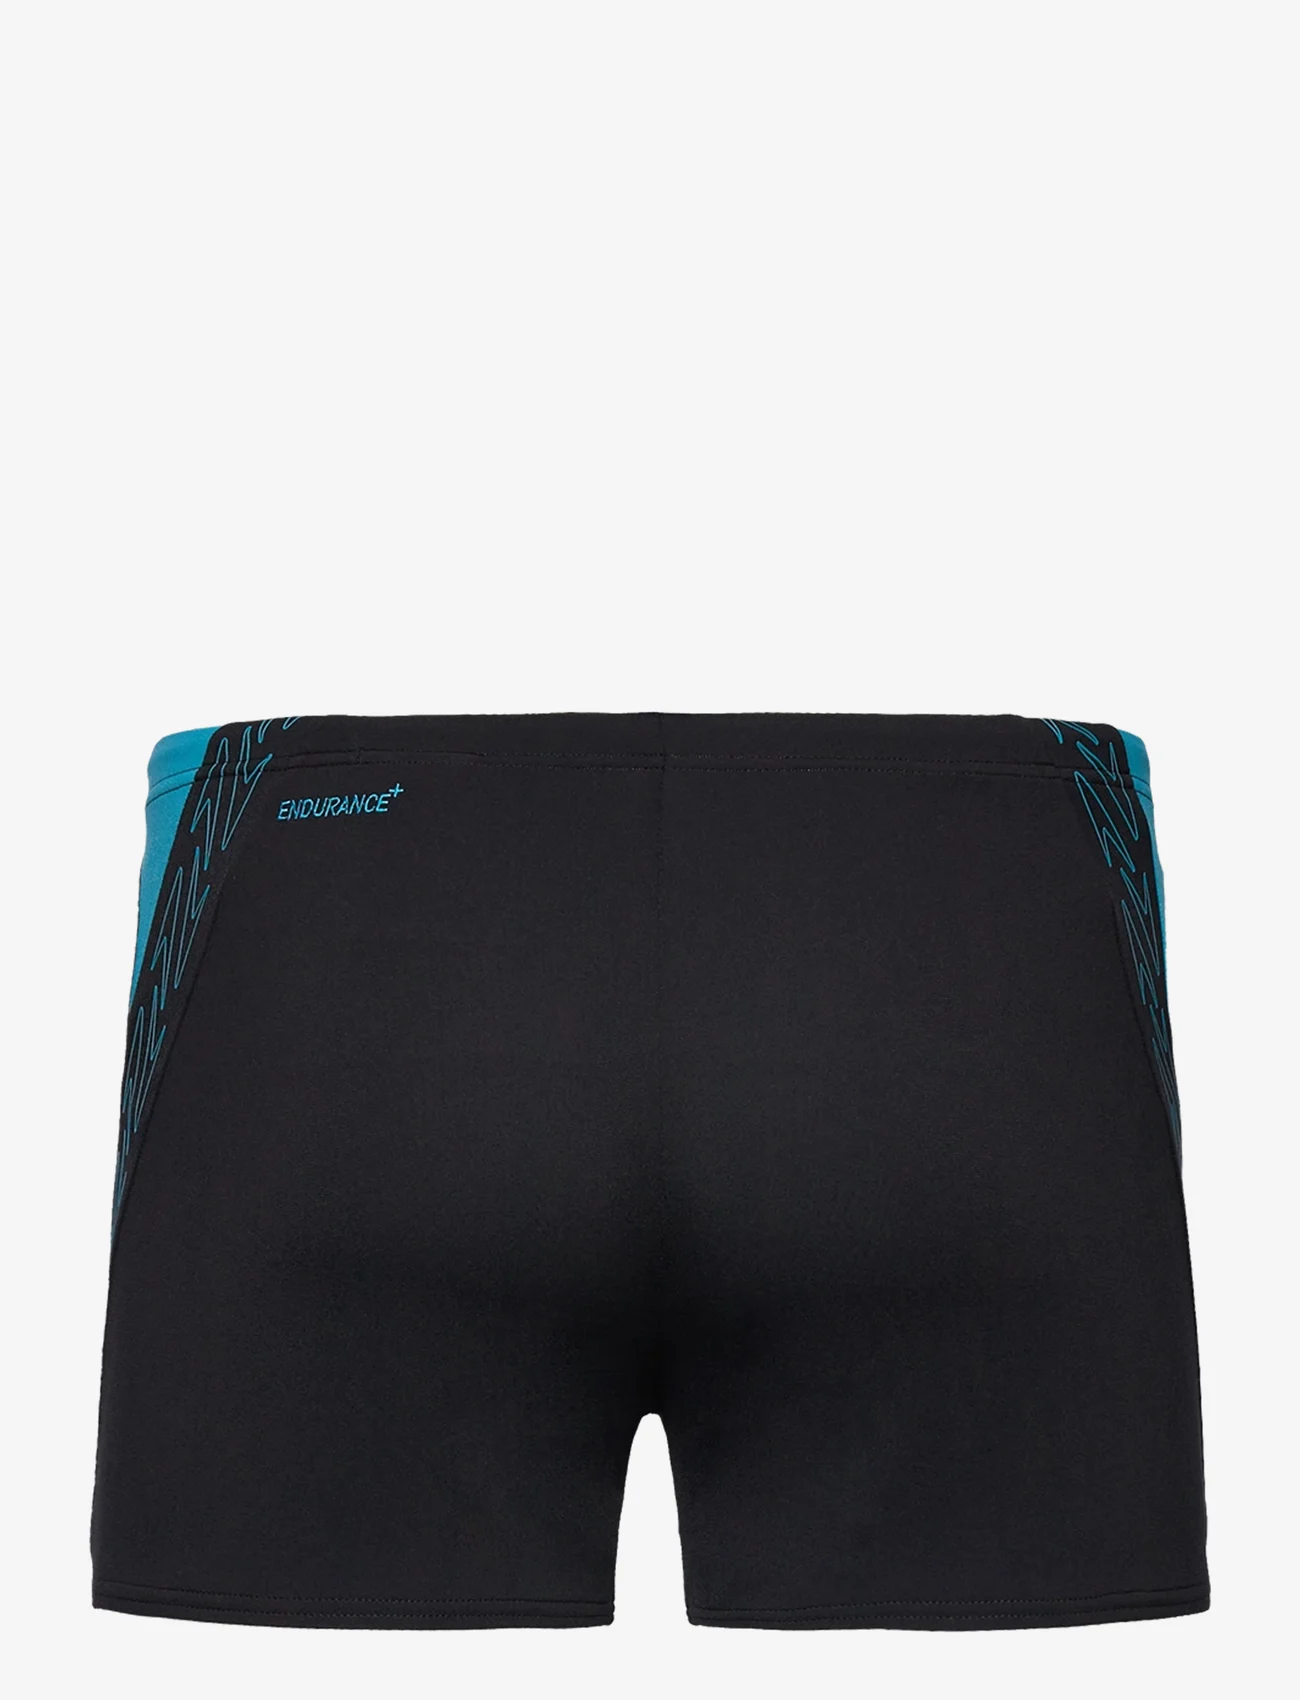 Speedo - Mens Hyperboom Splice Aquashort - swim shorts - black/blue - 1